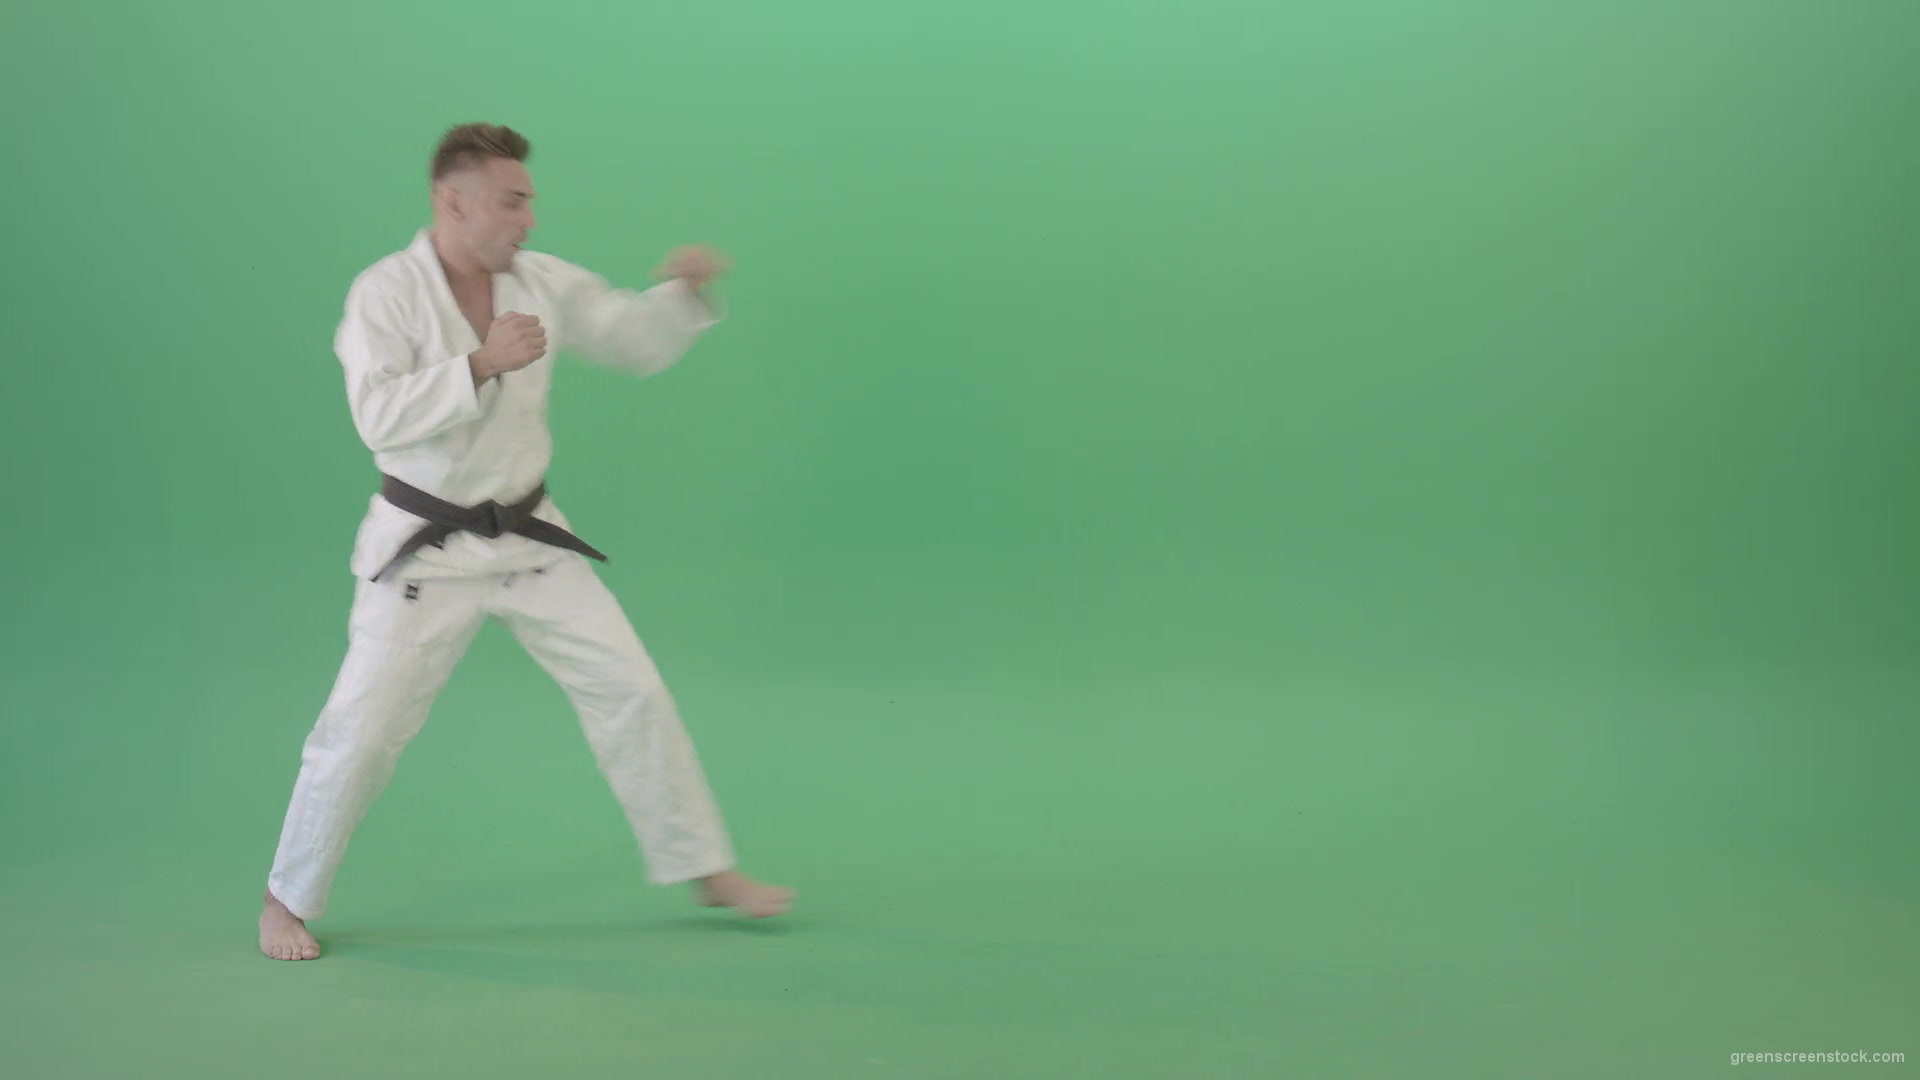 Jujutsu-Sportman-training-isolated-on-green-screen-4K-Video-Footage-1920_002 Green Screen Stock